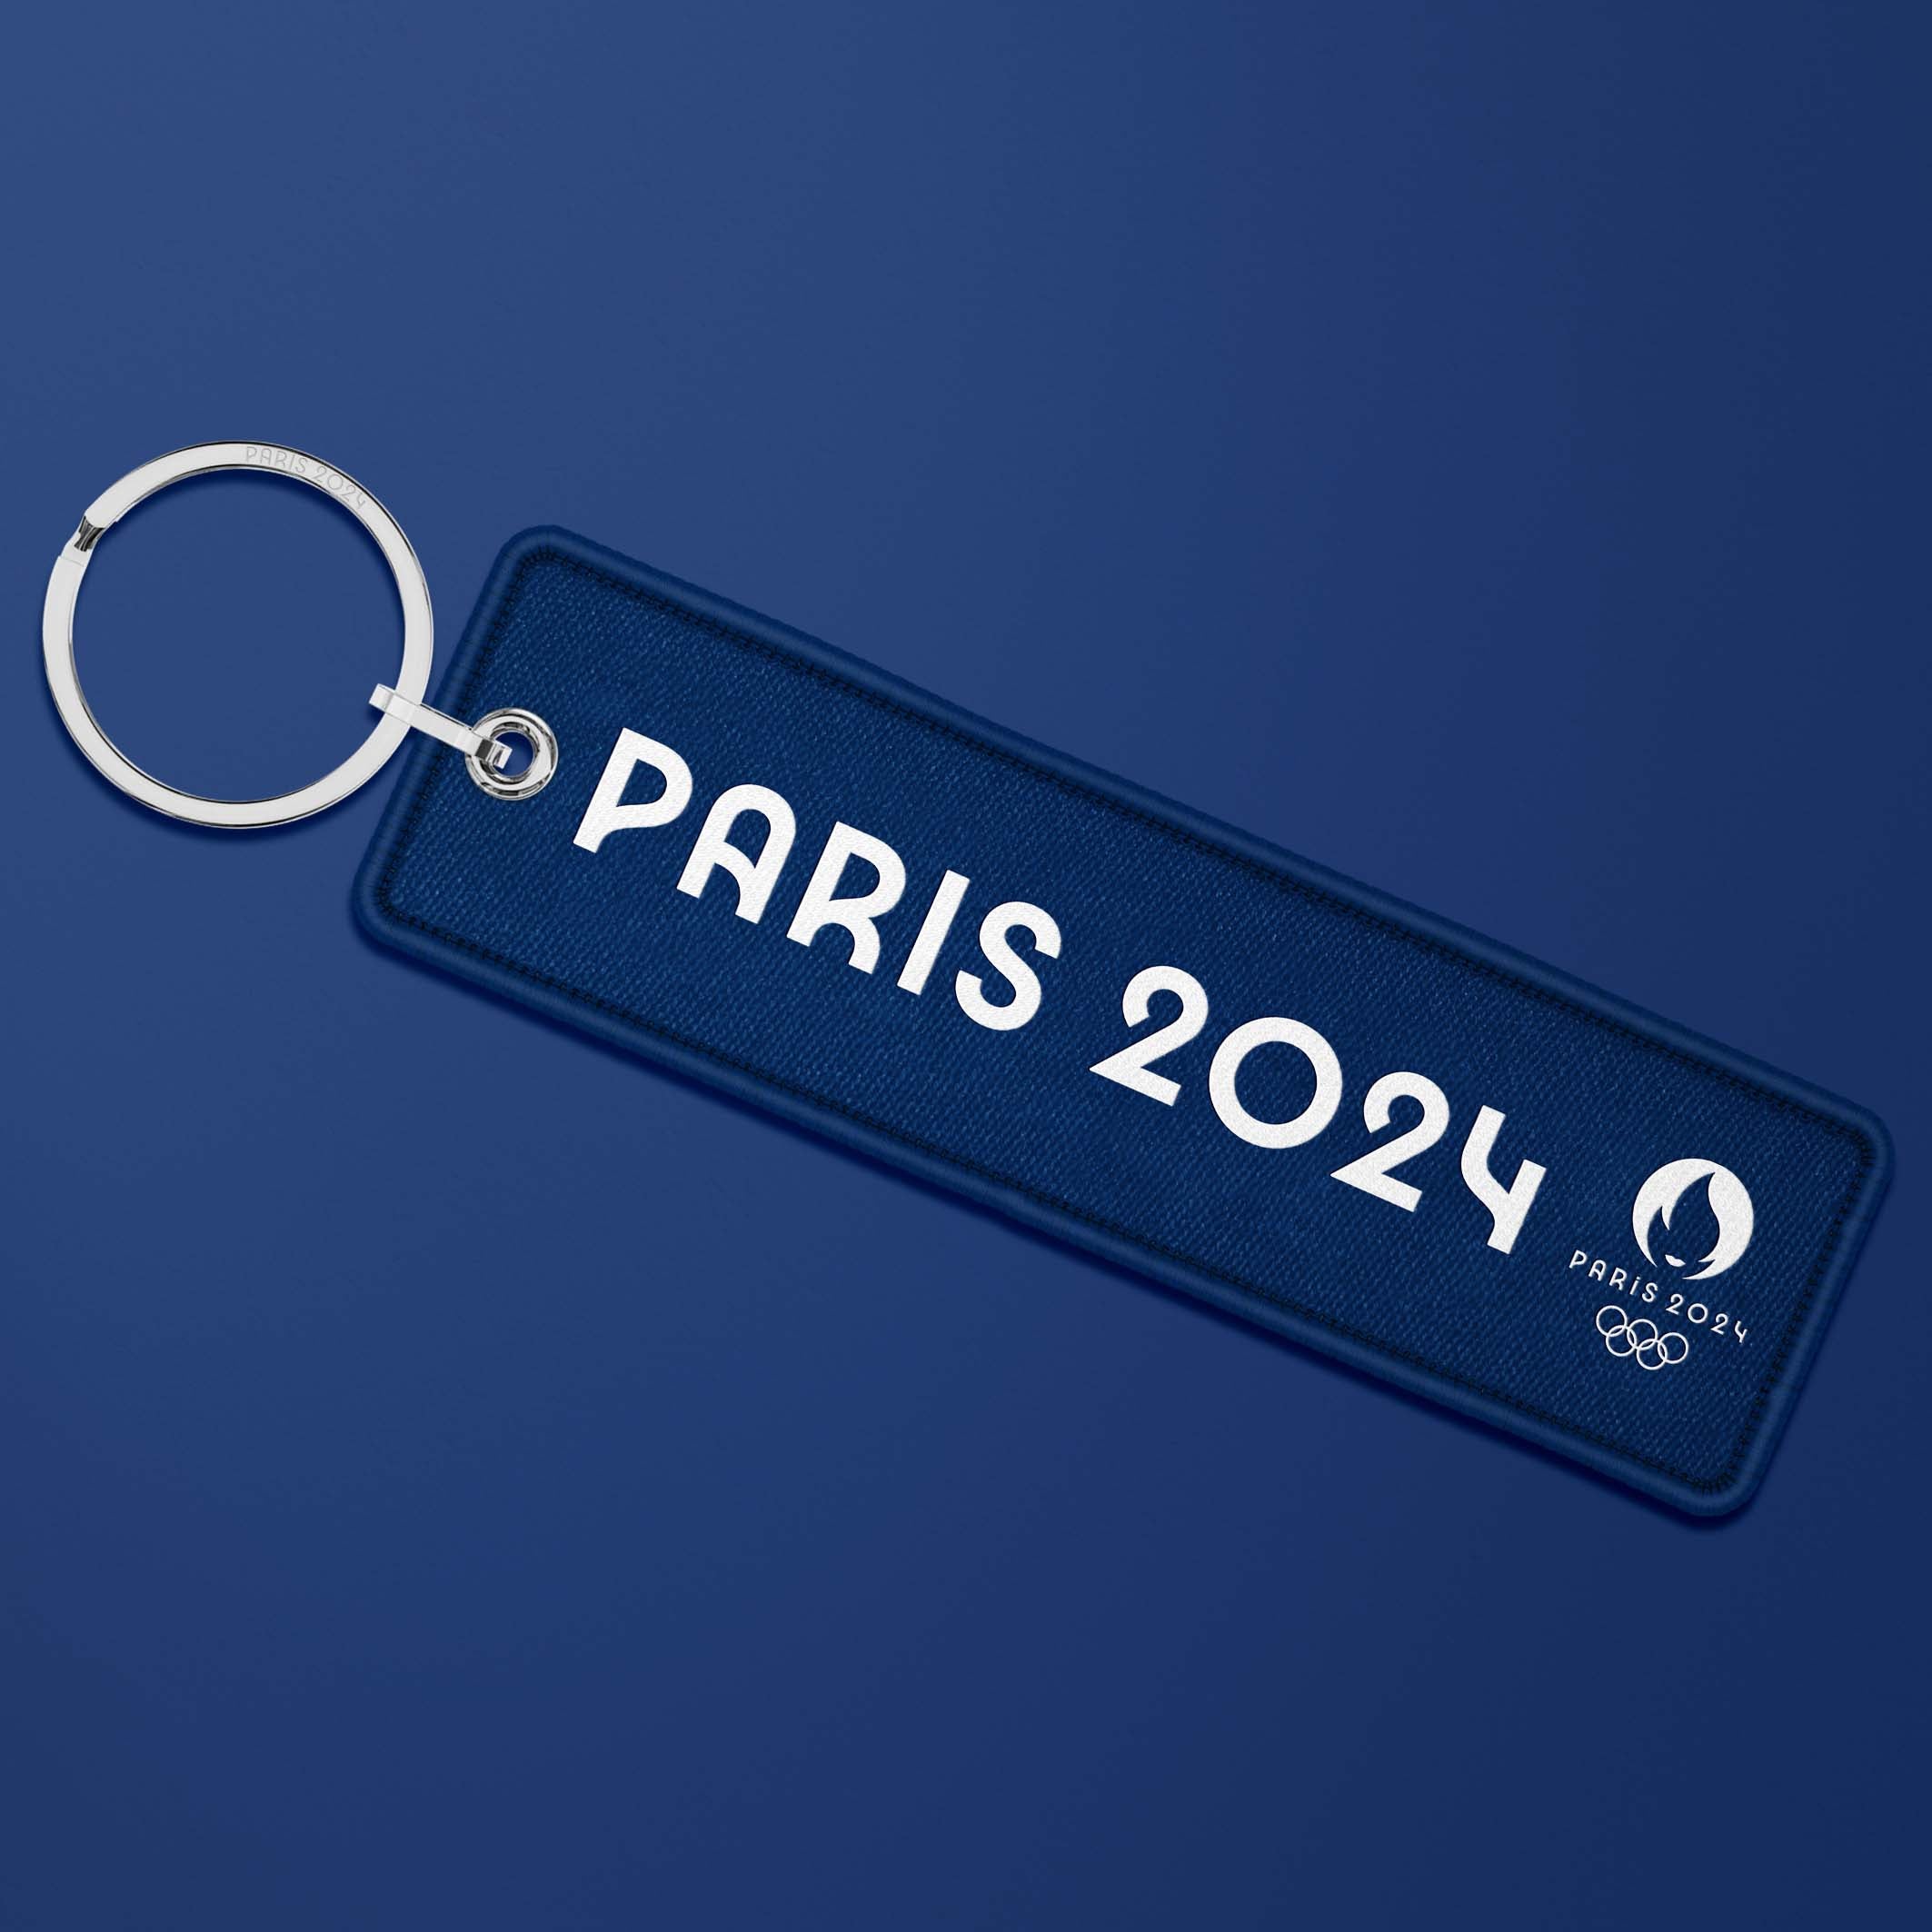 Porte-clés flamme Paris 2024 French blue - 7th Rugby